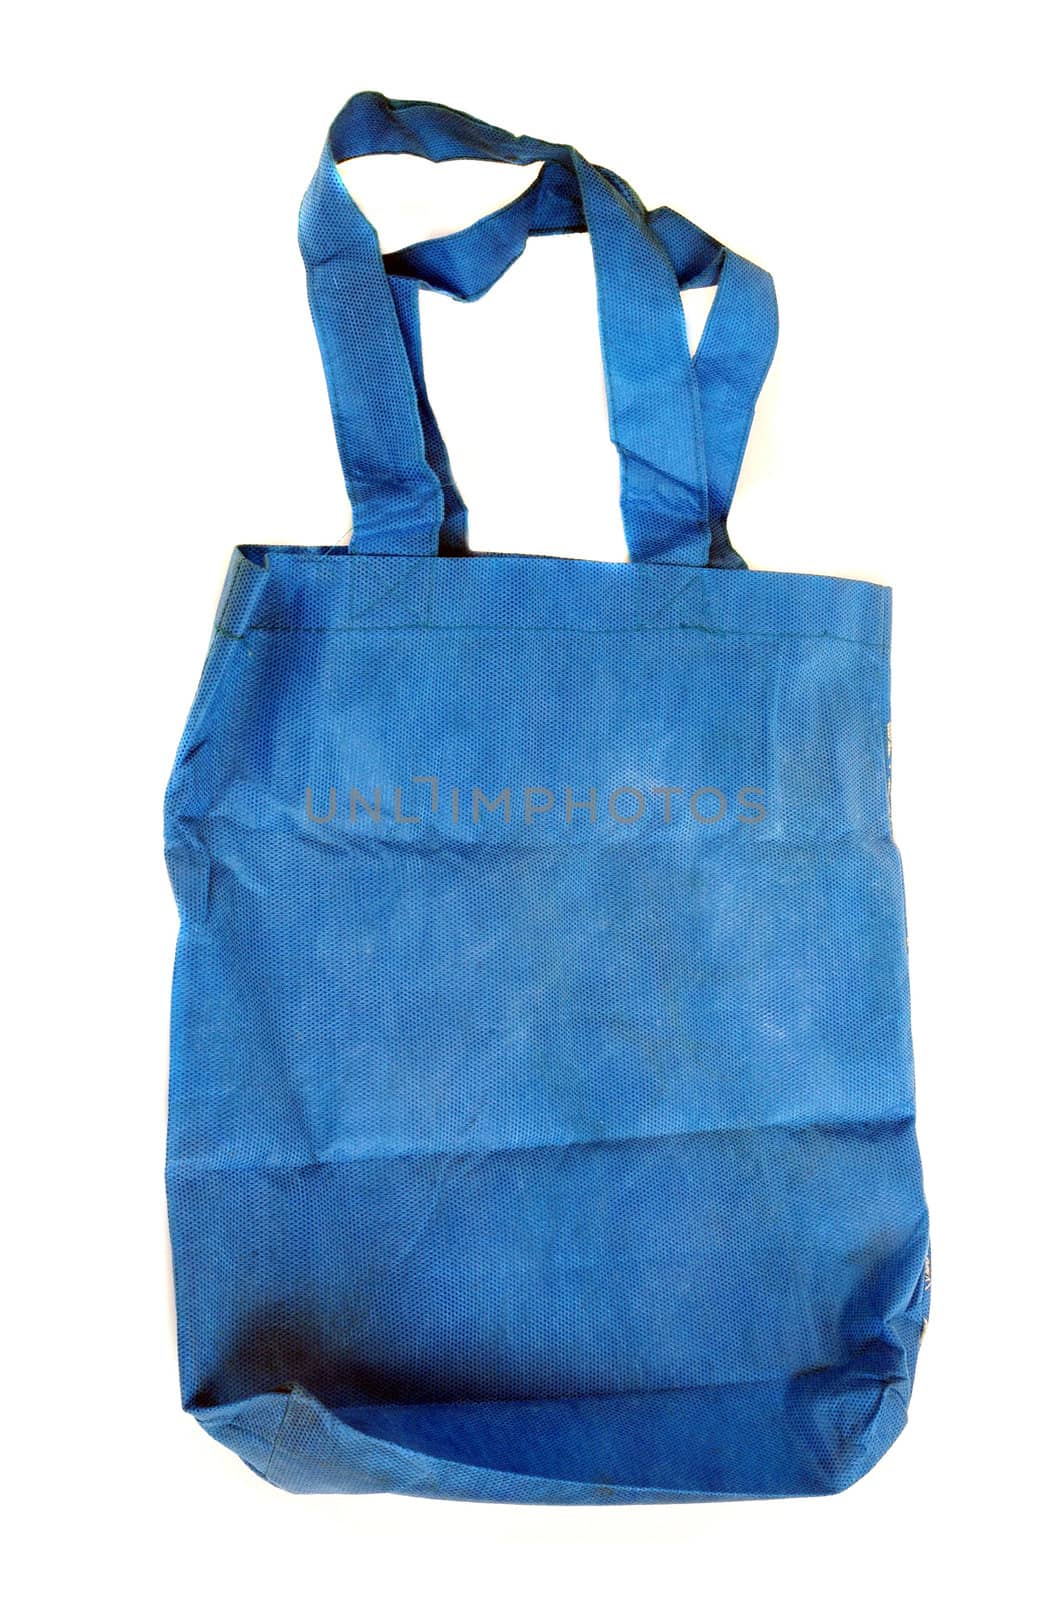 a blue cotton bag by antonihalim